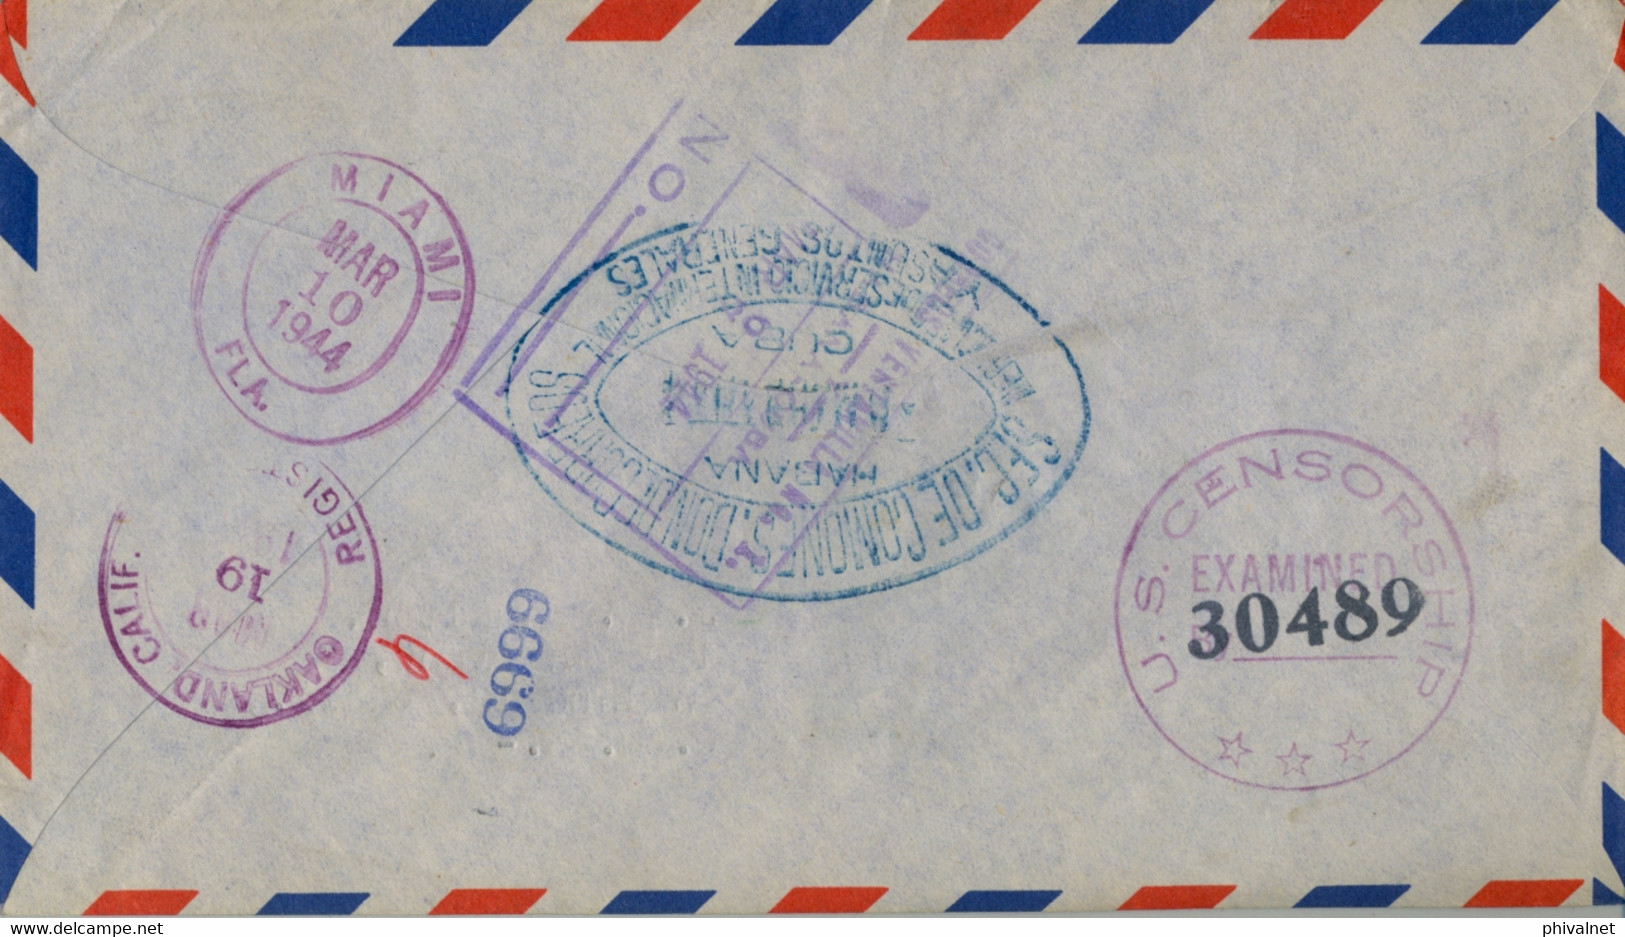 1944 CUBA , CERTIFICADO , HABANA - OAKLAND , CENSURA , NEGOCIADO DE SERVICIO INTERNACIONAL , RETIRO COMUNICACIONES - Cartas & Documentos